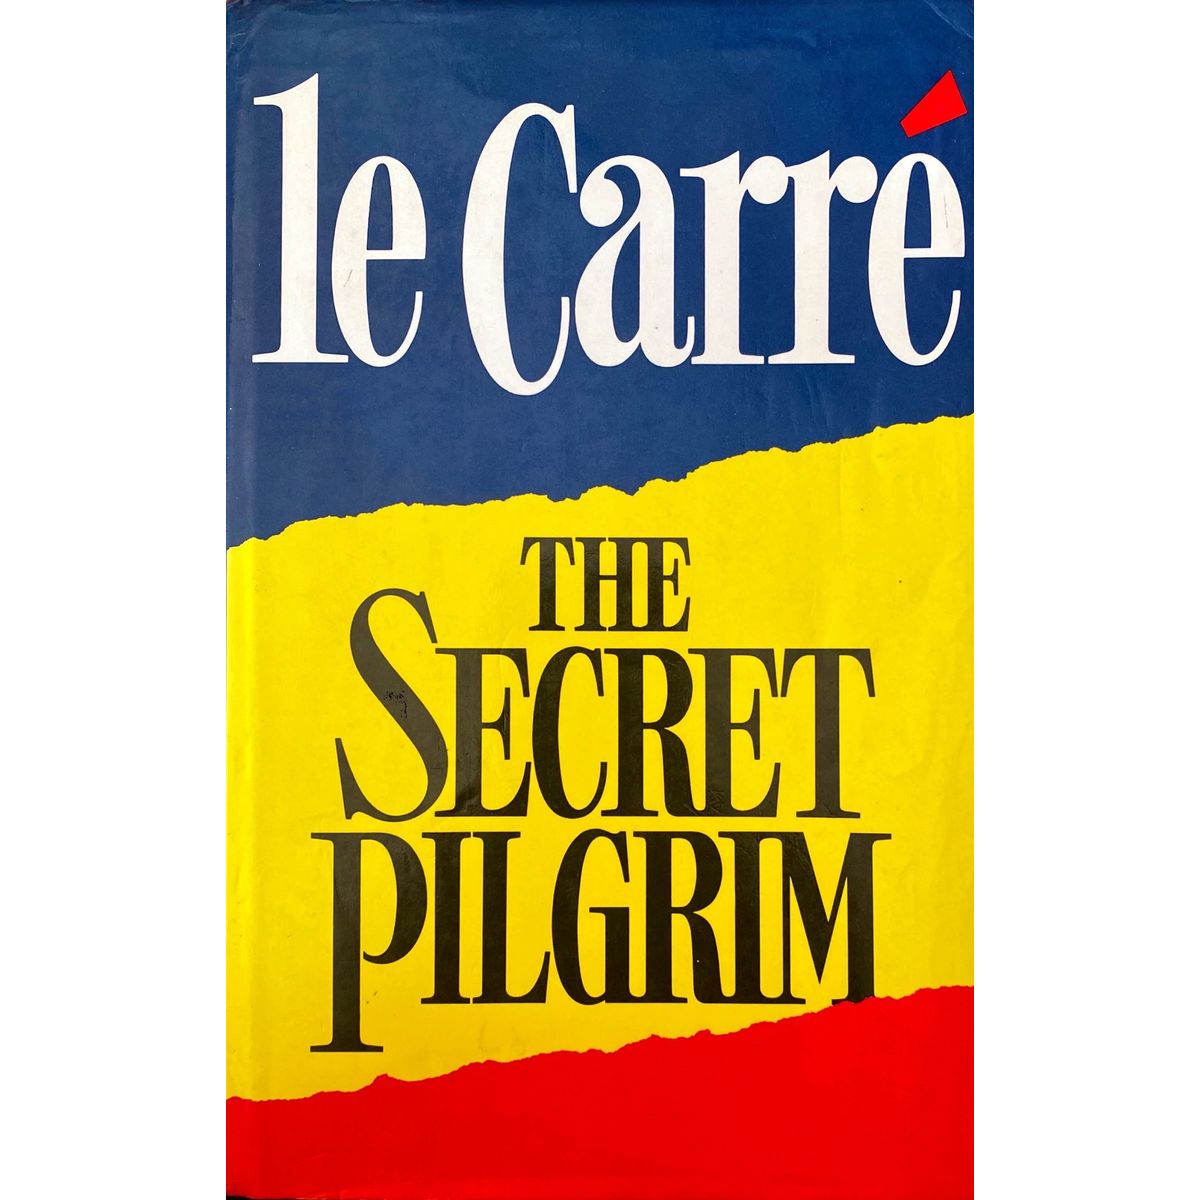 ISBN: 9780394588421 / 0394588428 - The Secret Pilgrim by John Le Carre [1990]